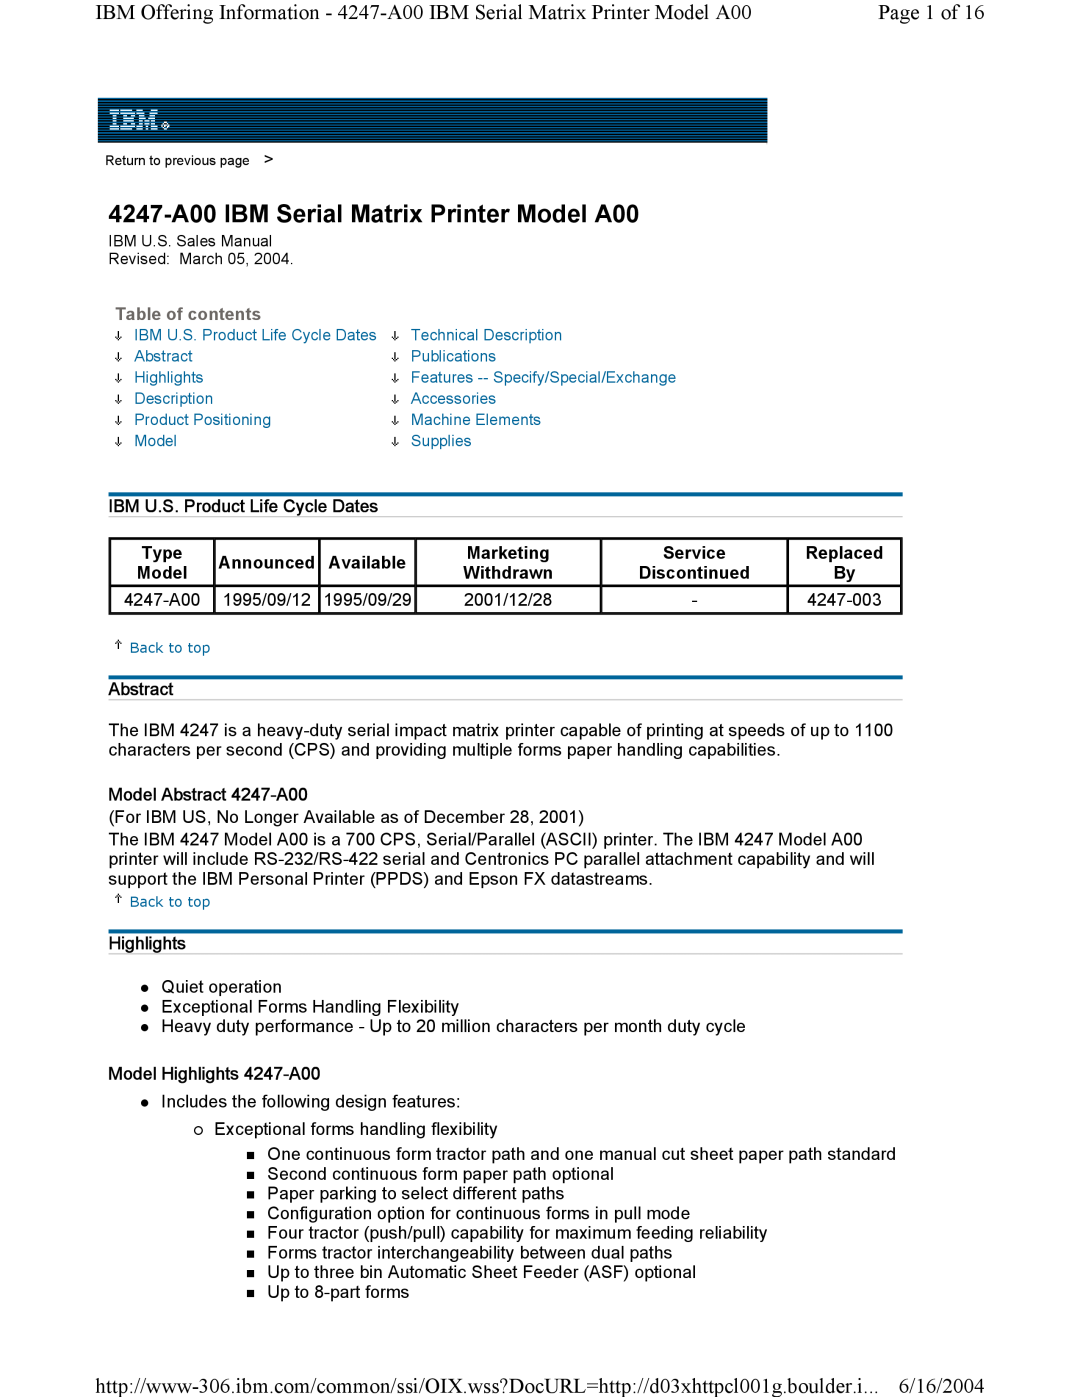 Lexmark manual 4247-A00 IBM Serial Matrix Printer Model A00 